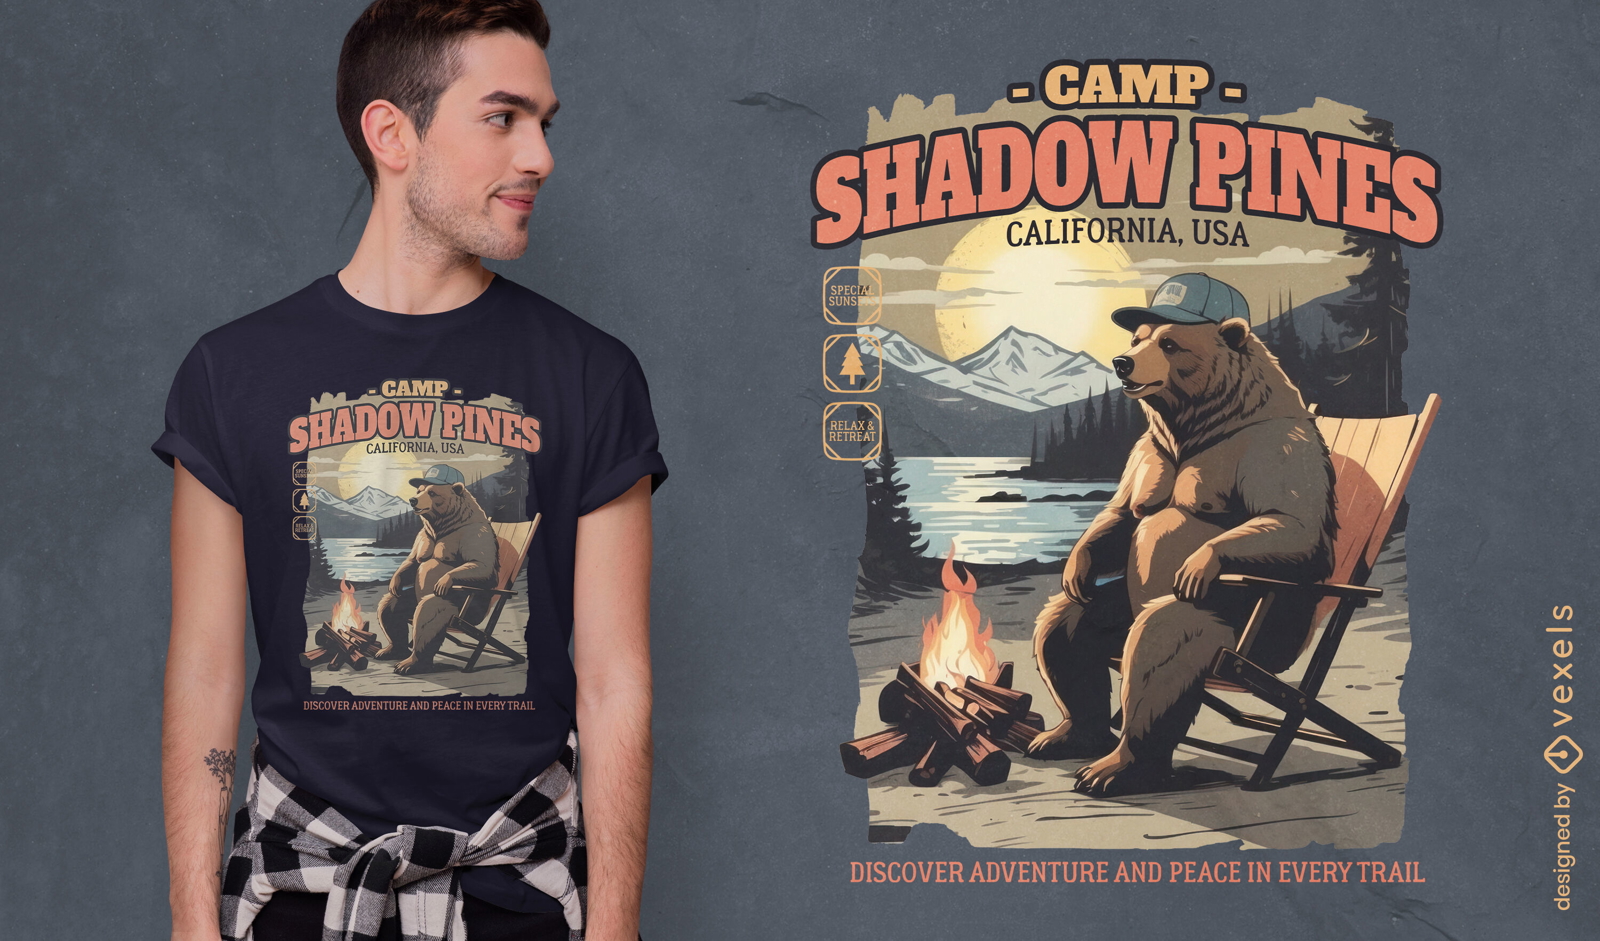 Camp Shadow Pines Kalifornien USA T-Shirt Design